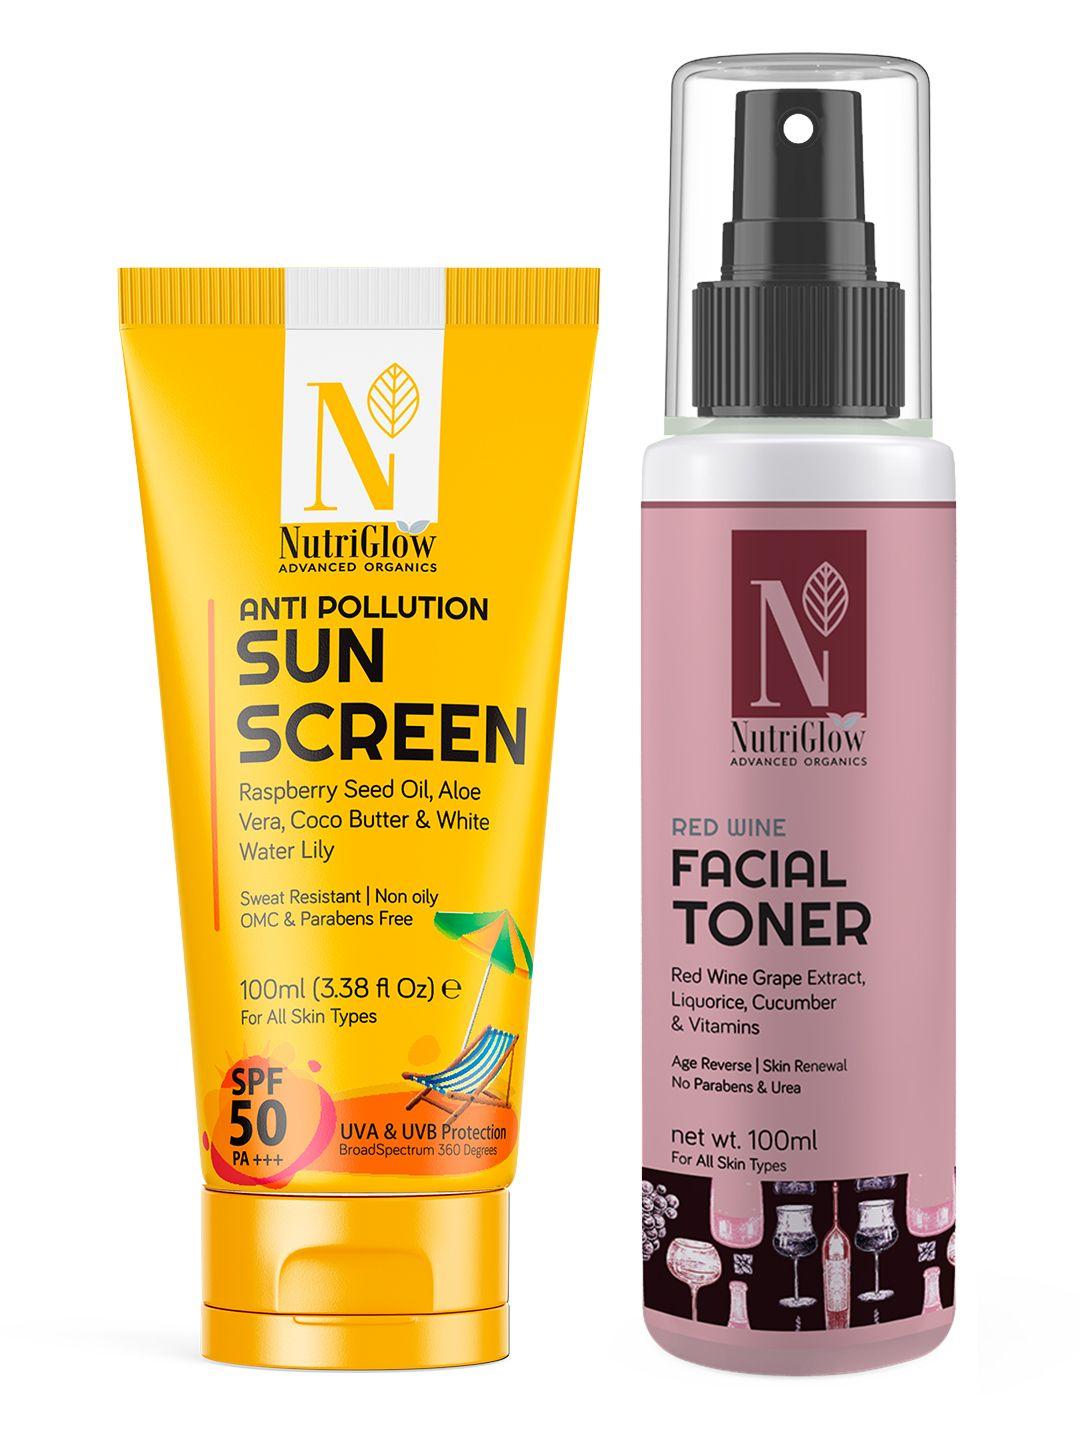 nutriglow advanced organics red wine facial toner 100ml & anti pollution sun screen spf 50